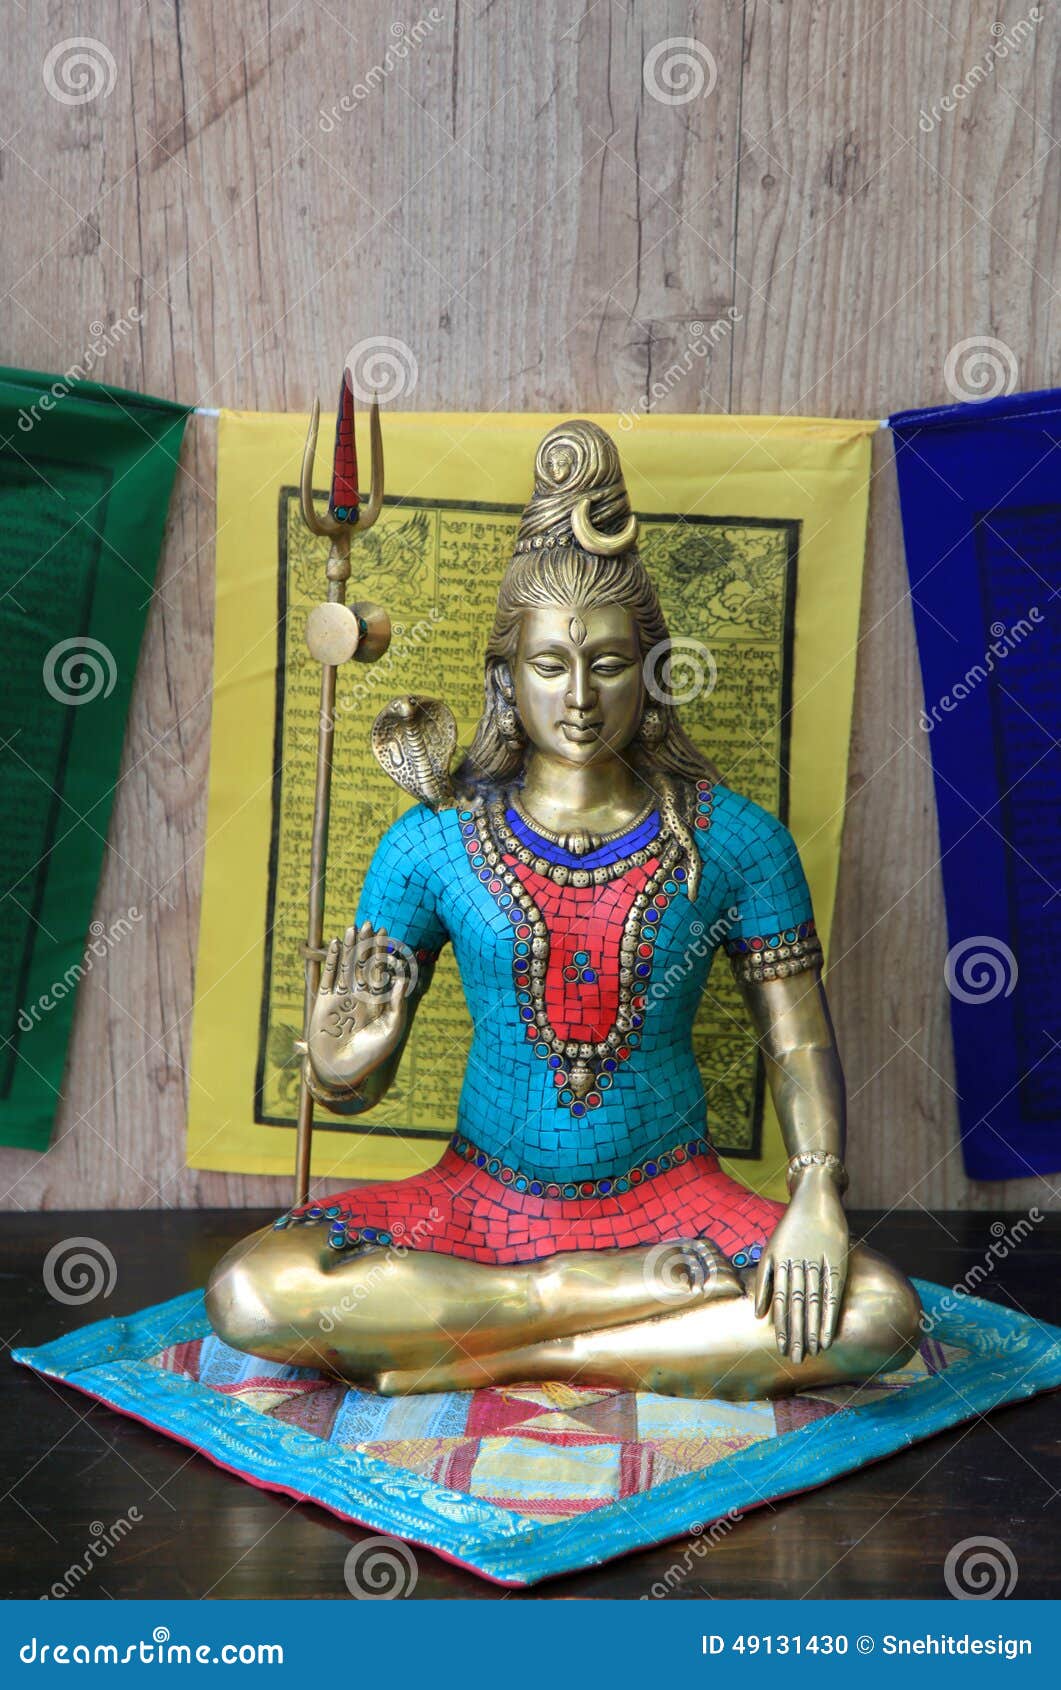 Lord Shiva statue stock photo. Image of culture, beautiful - 49131430